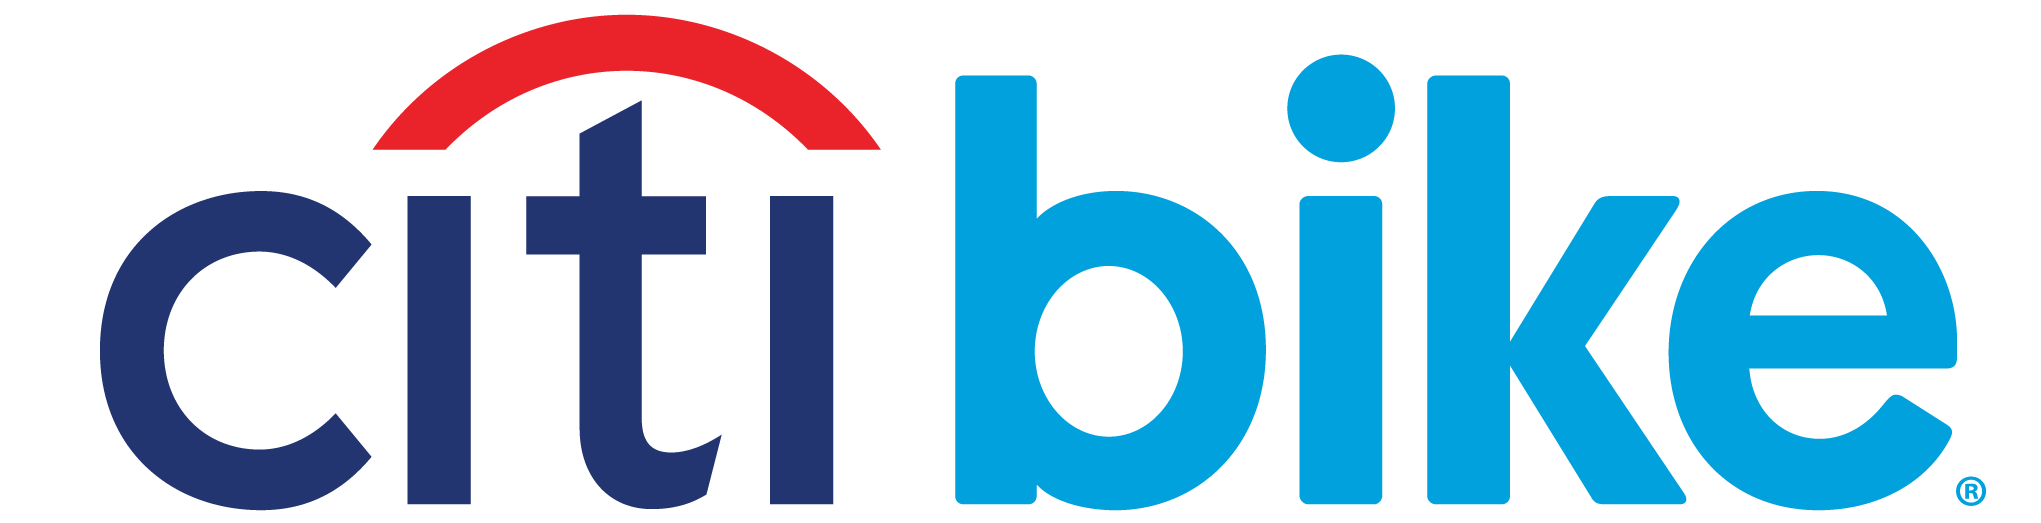 Citibike logo